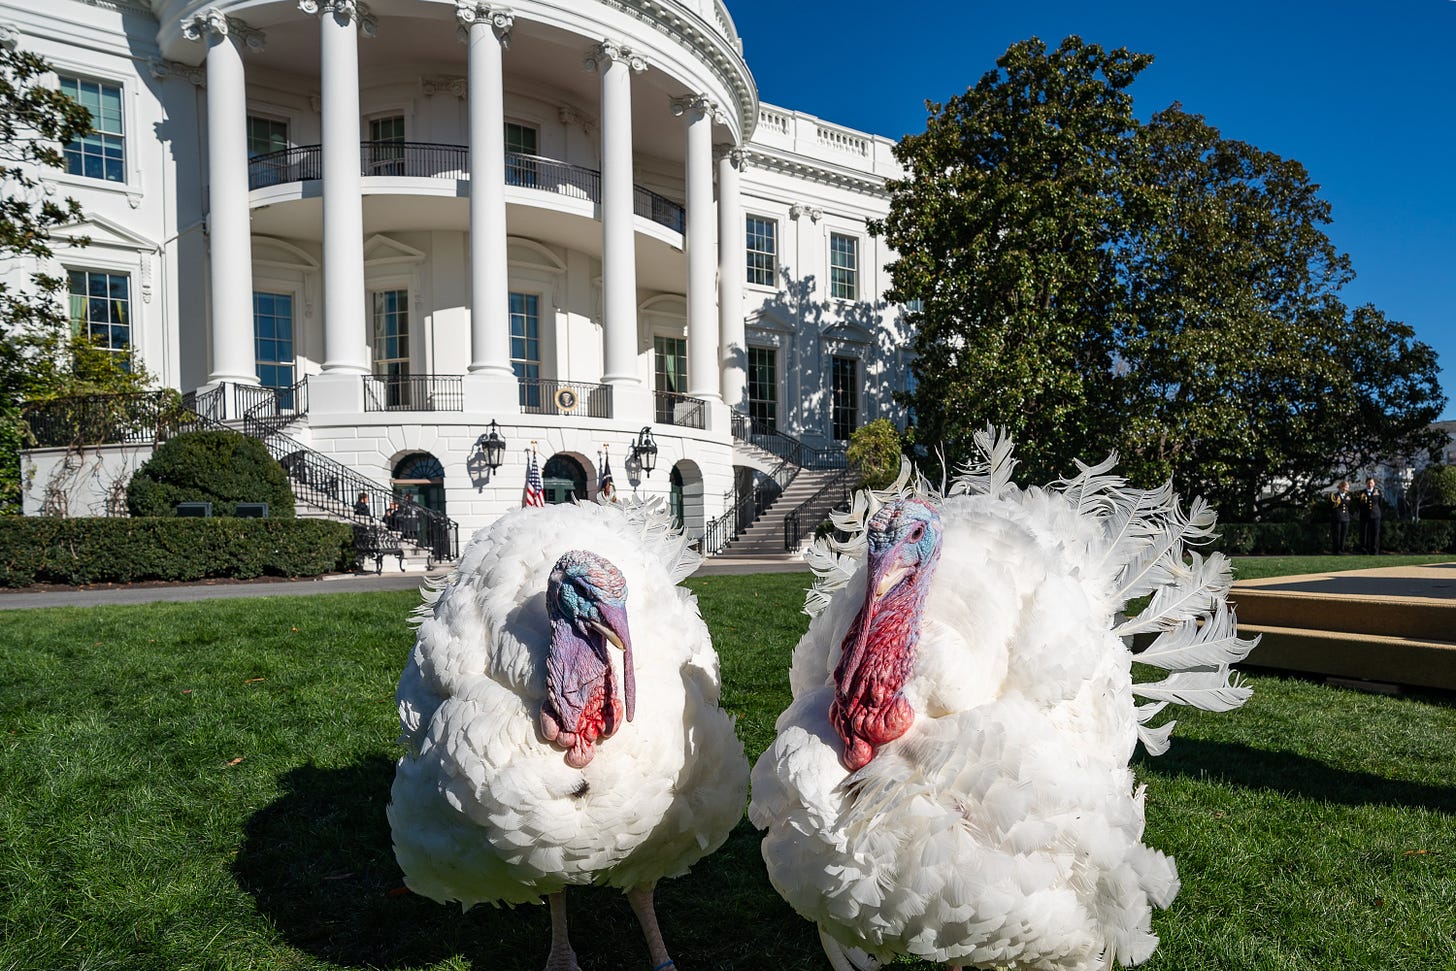 President Biden on X: "Folks, meet this year's National Thanksgiving Turkeys:  Chocolate and Chip. https://t.co/bXJIVPmJZ6" / X